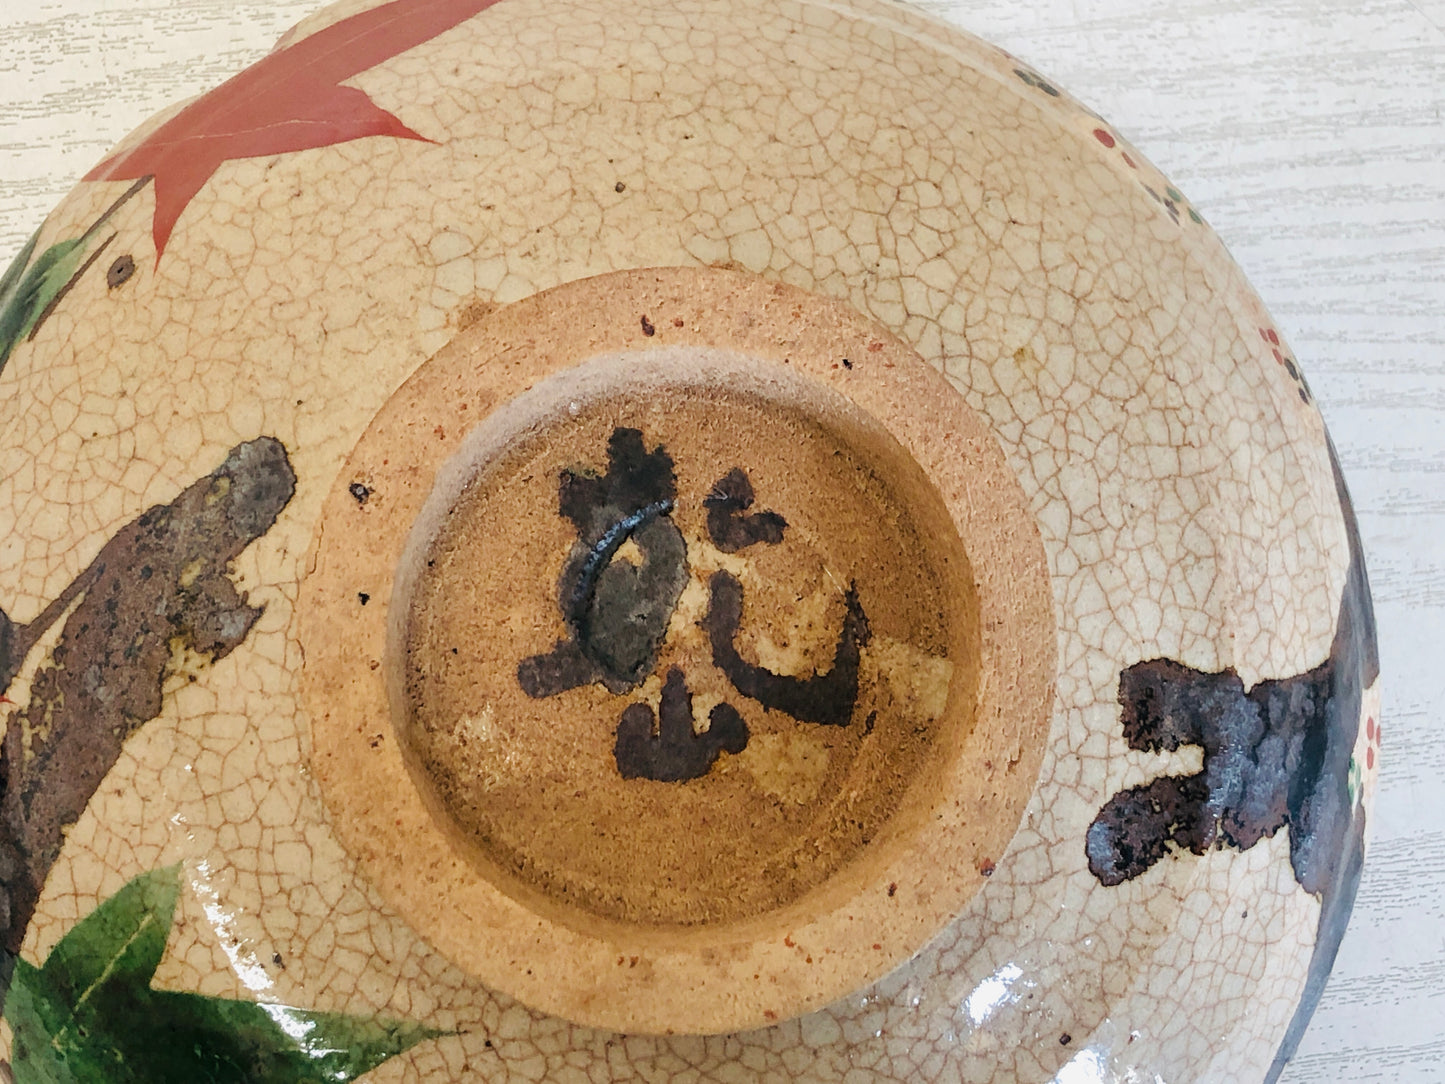 Y3209 CHAWAN Inuyama-ware Kenzan autumn leaves pattern Japanese bowl pottery